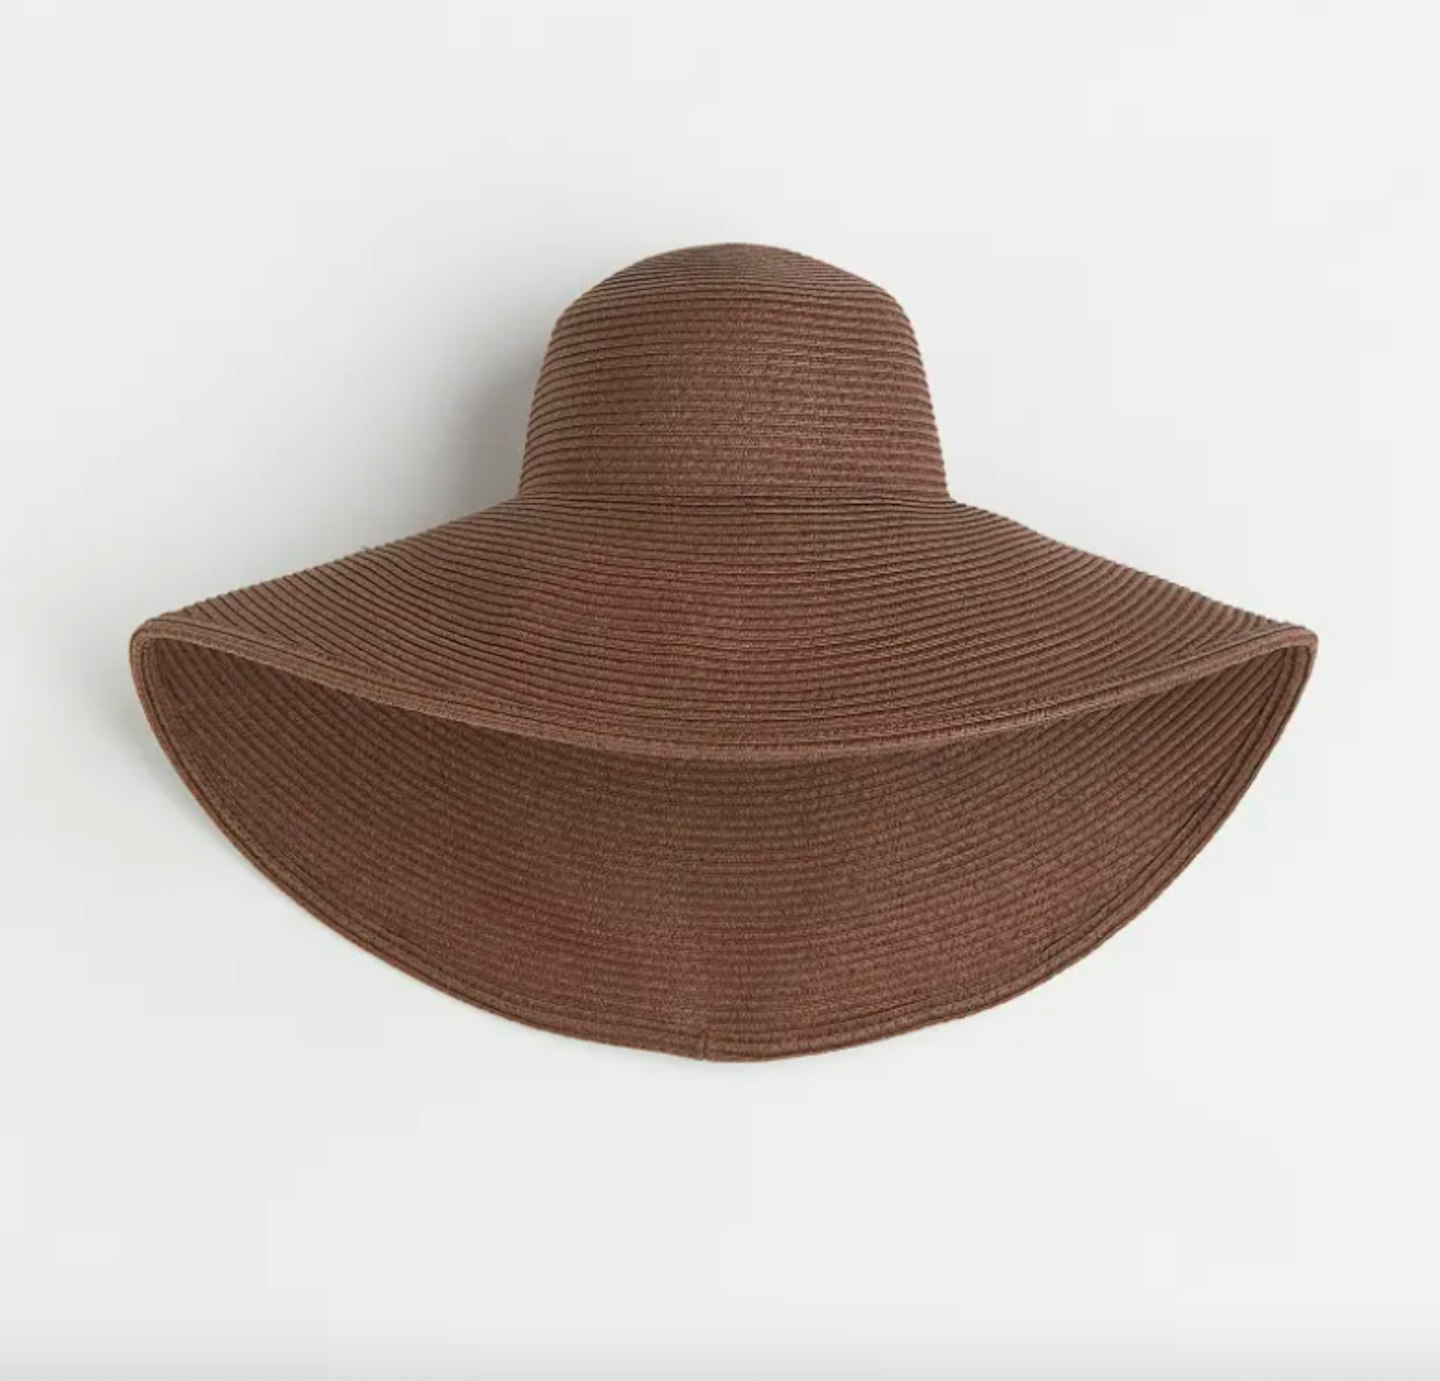 H&M, Asymmetric Straw Hat, £14.99